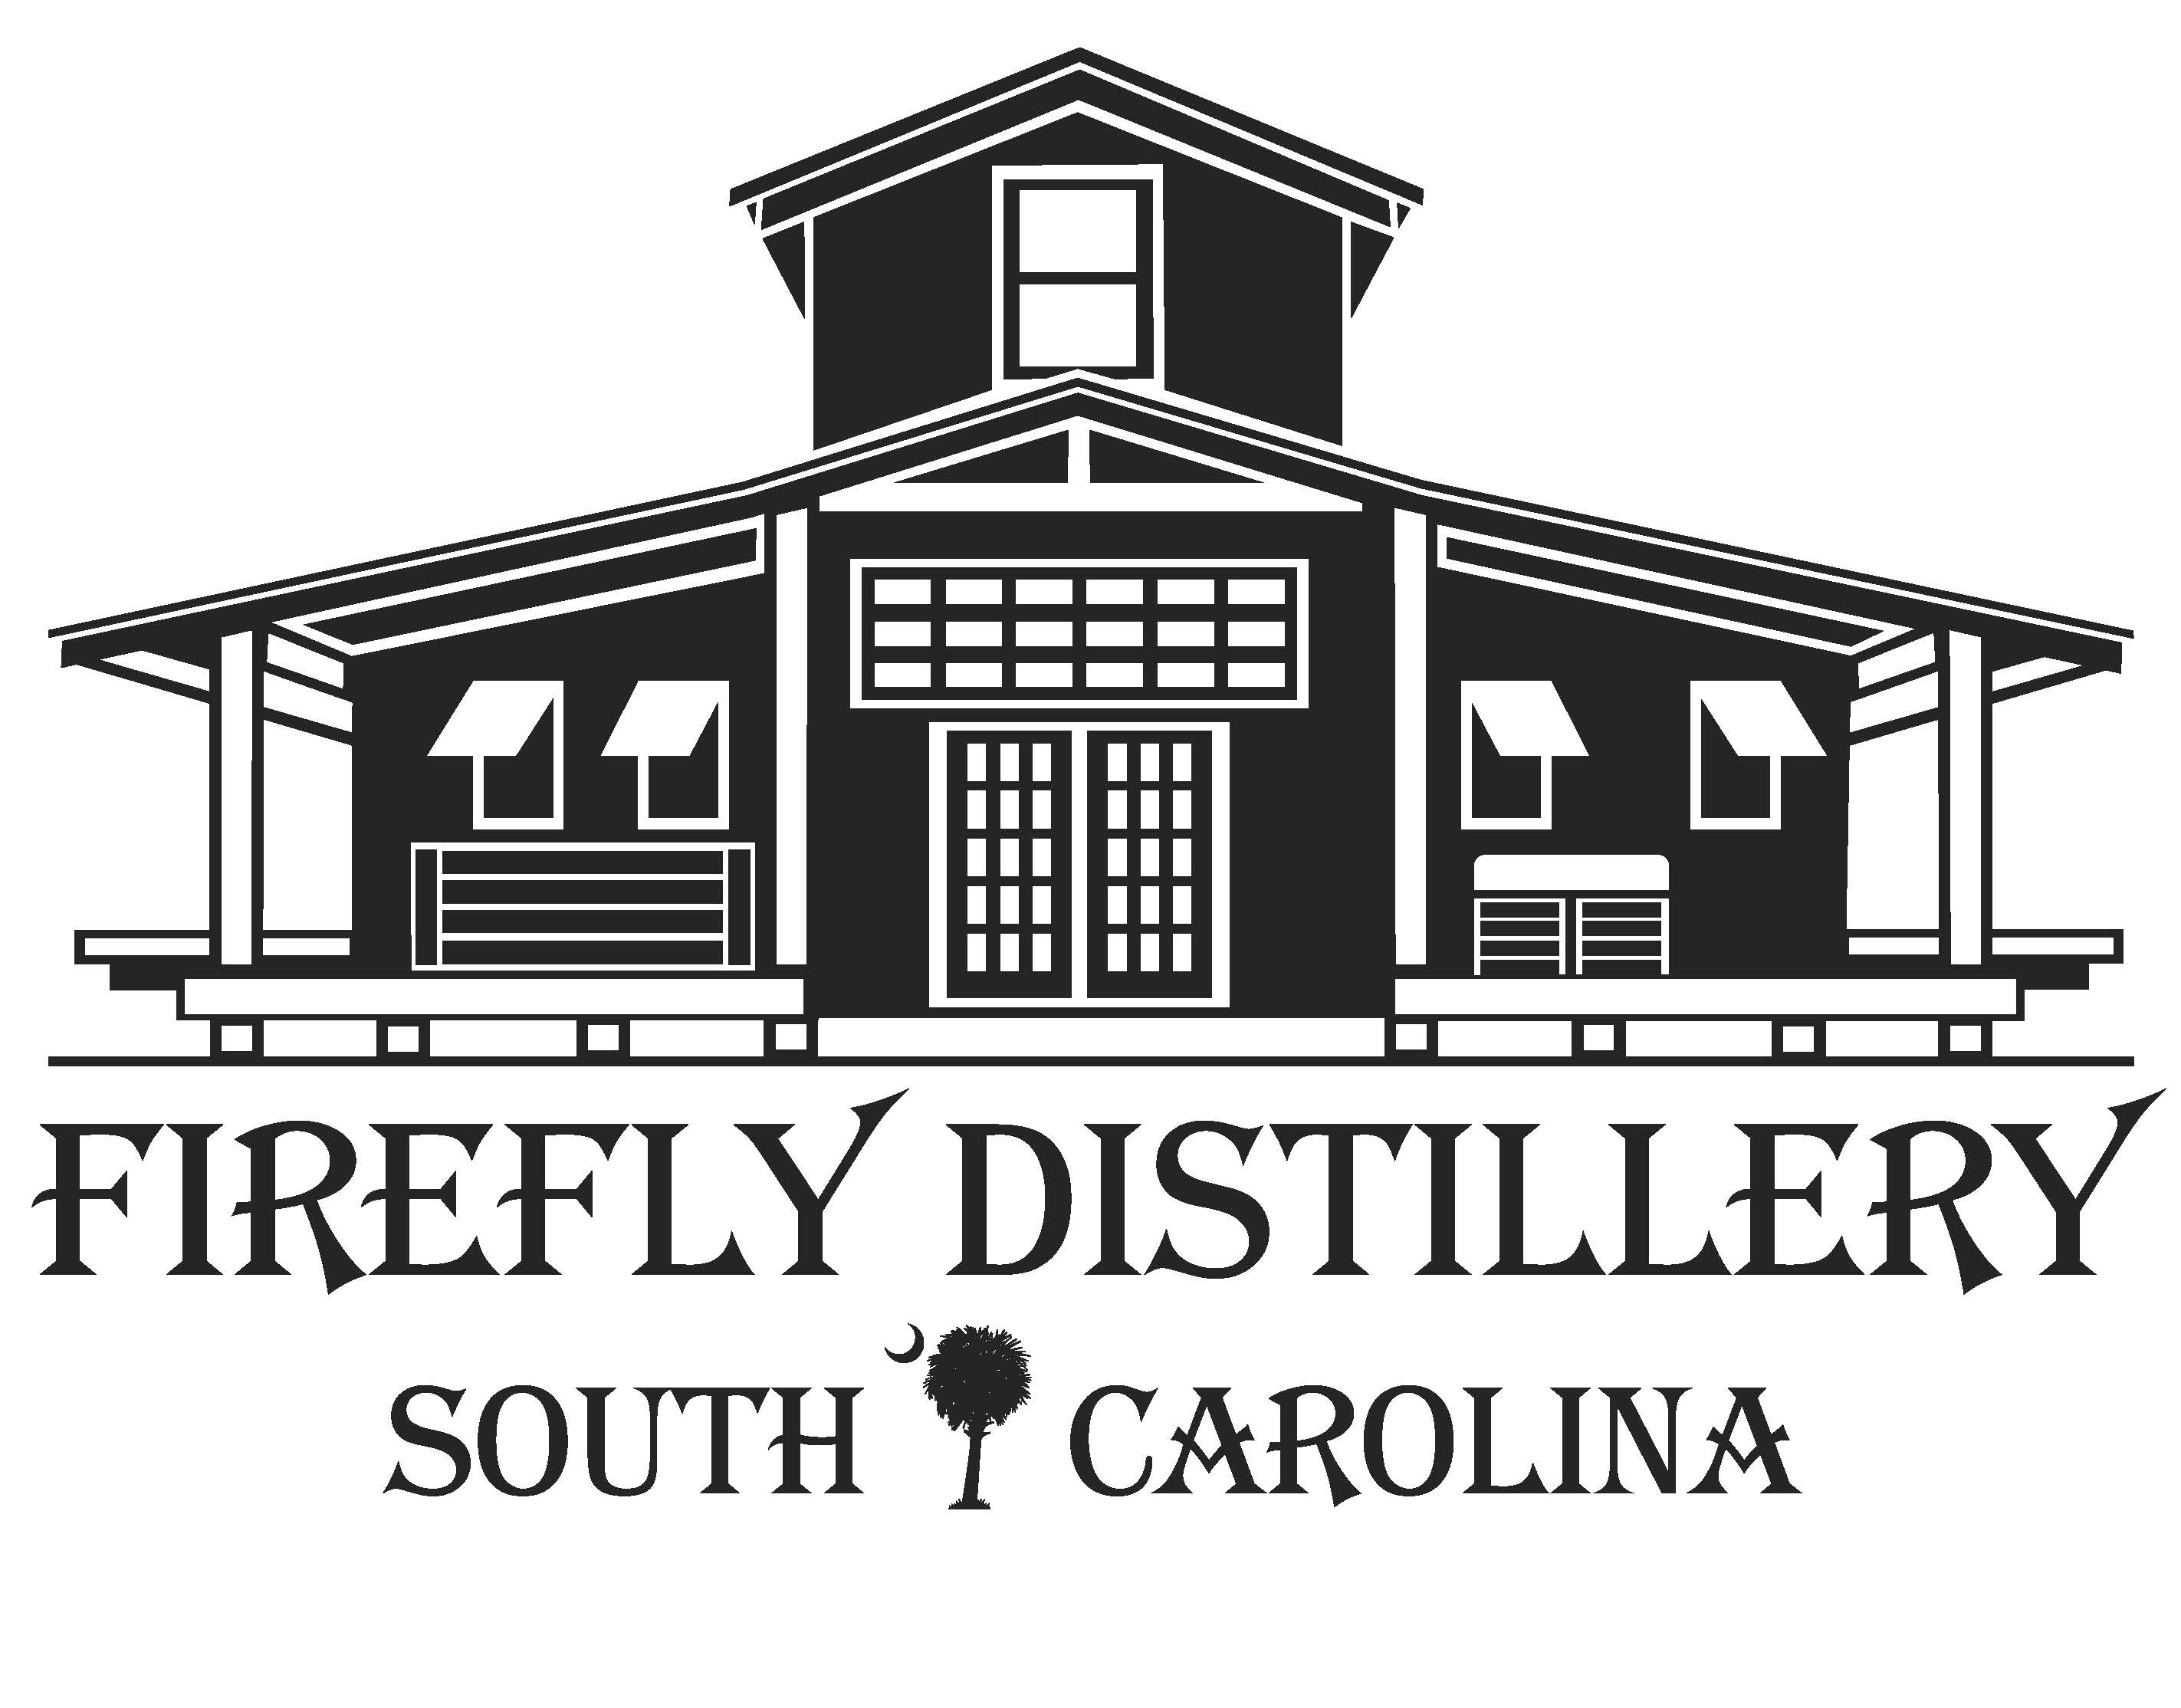 Firefly distillery logo